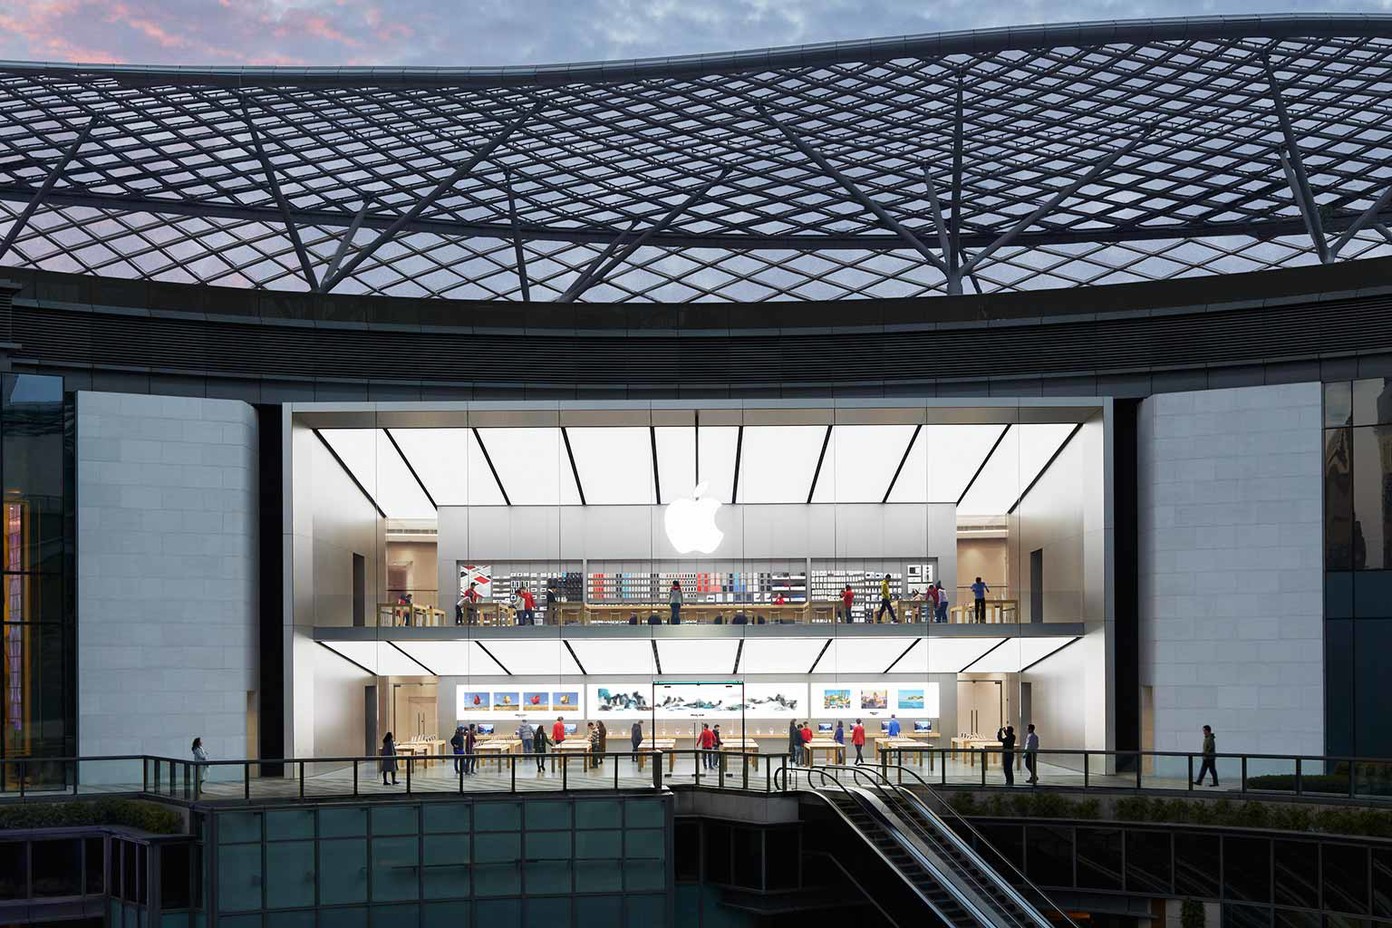 深圳益田假日广场苹果店景观 Apple Store Shenzhen Yitian Holiday Plaza by SWA - 灵感邦 ...